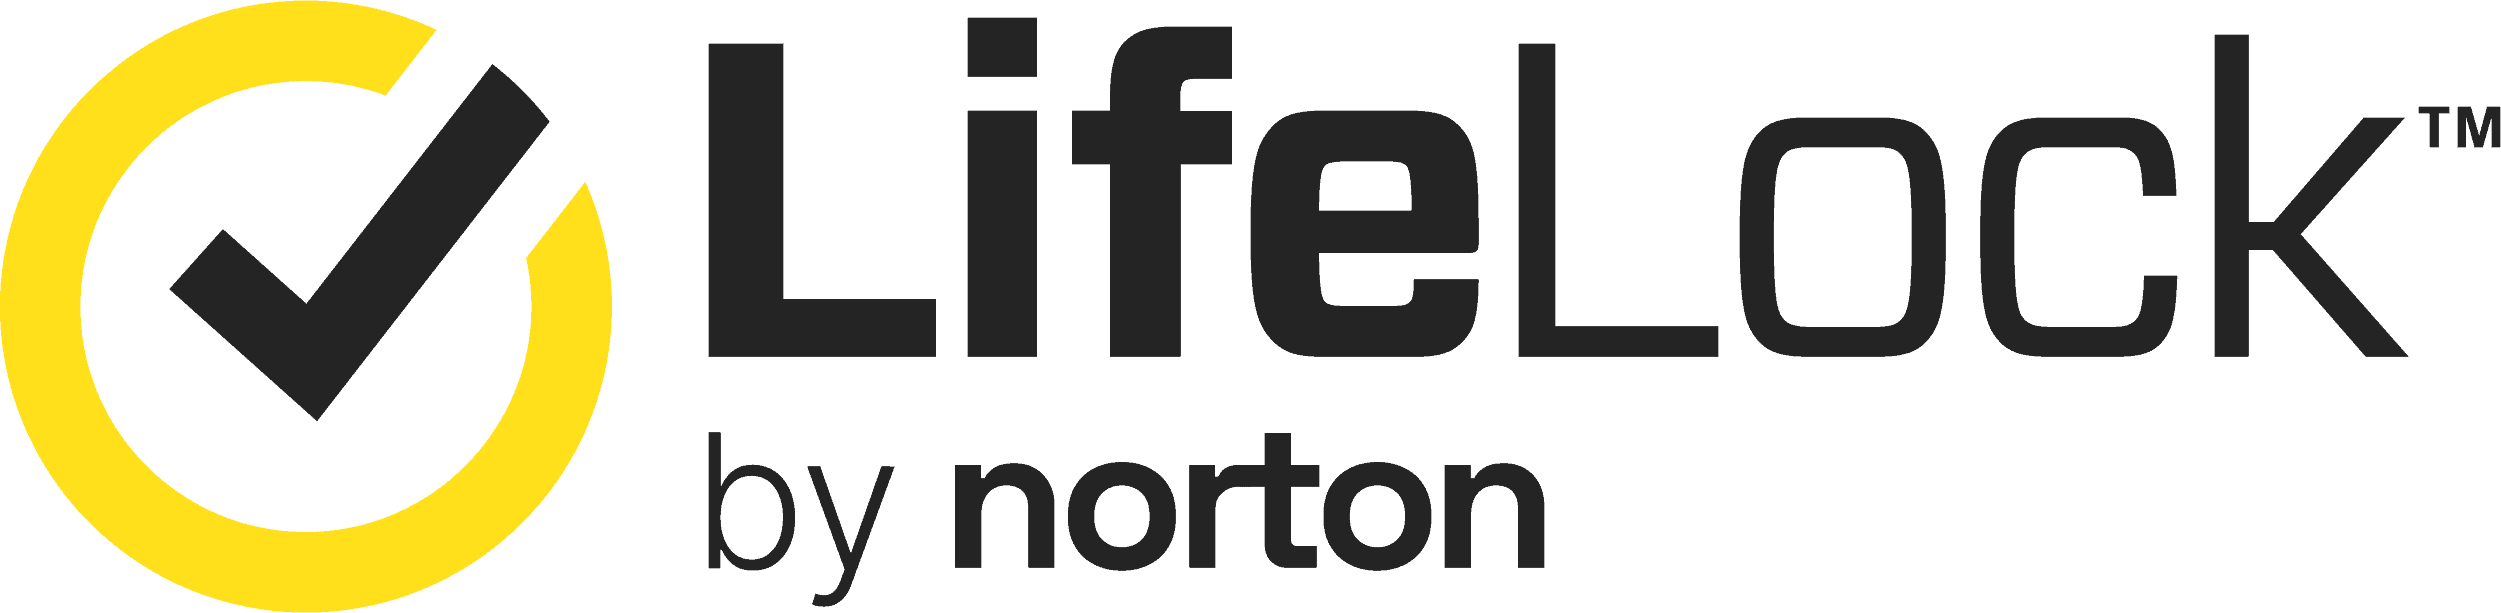 LifeLock - Product Logo